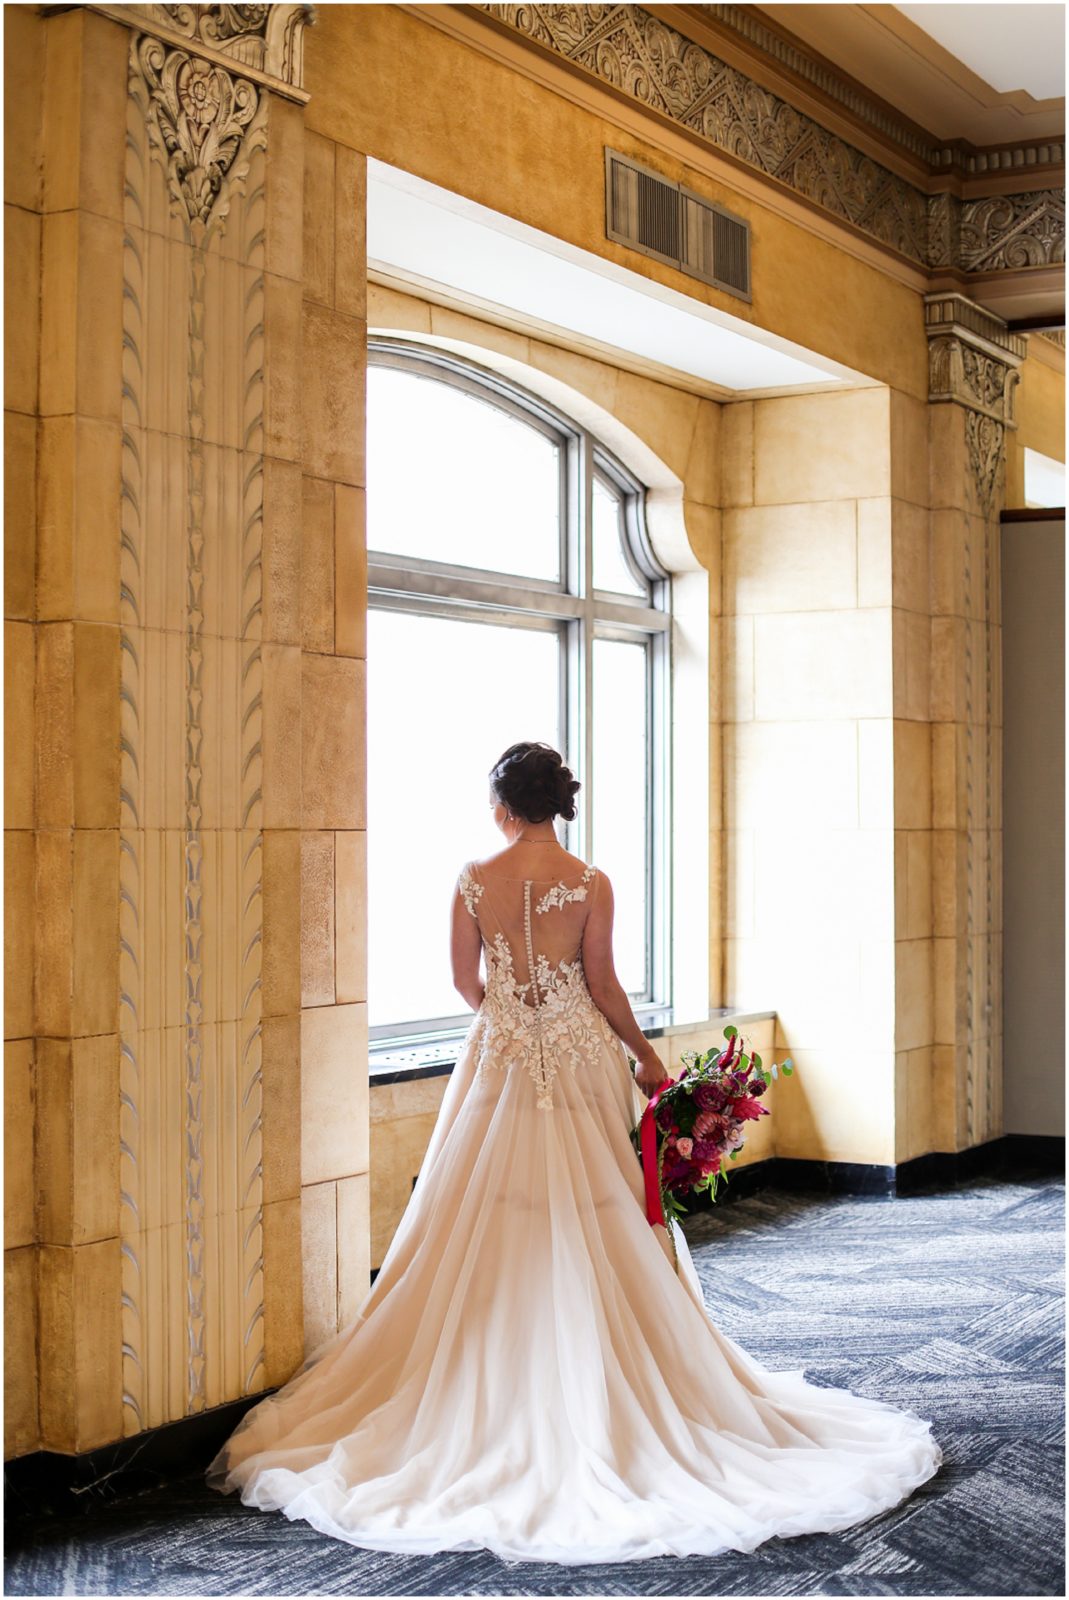 bridal gown - Grand Hall Wedding in Kansas City - Wedding Photography - Kansas City Best Wedding Photographer - Overland Park Wedding Photographer - The Grand Hall KC